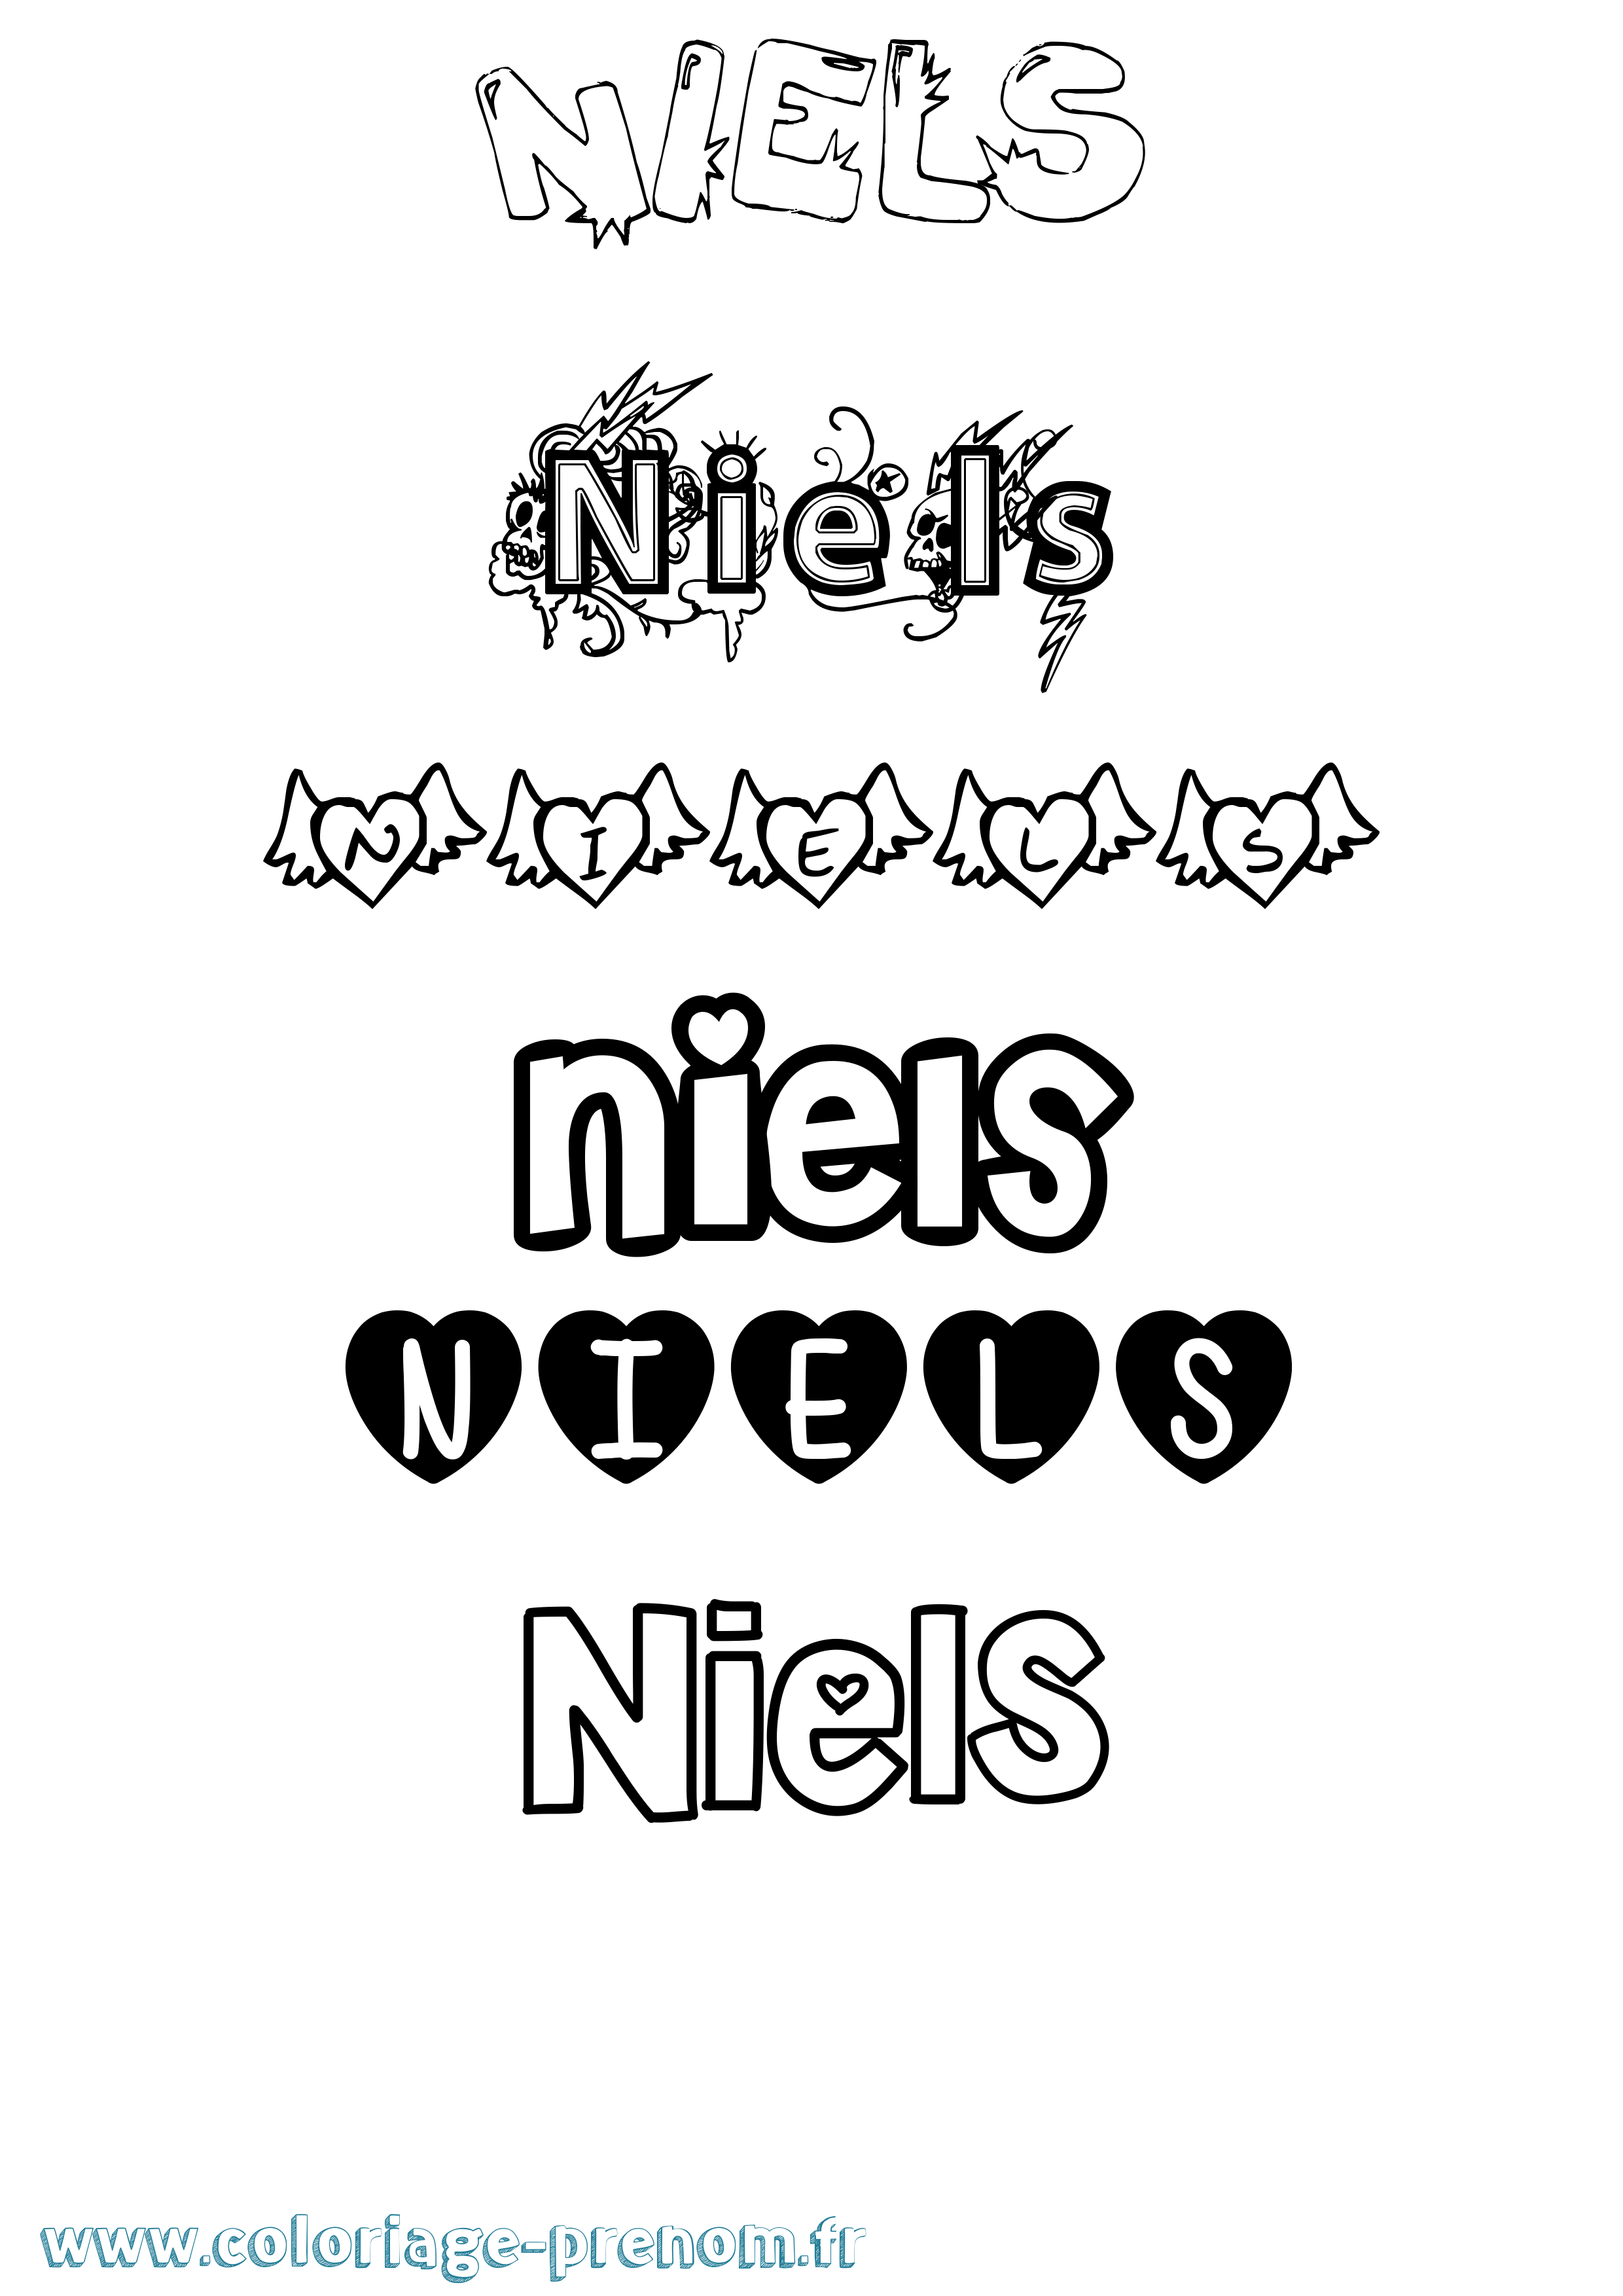 Coloriage prénom Niels